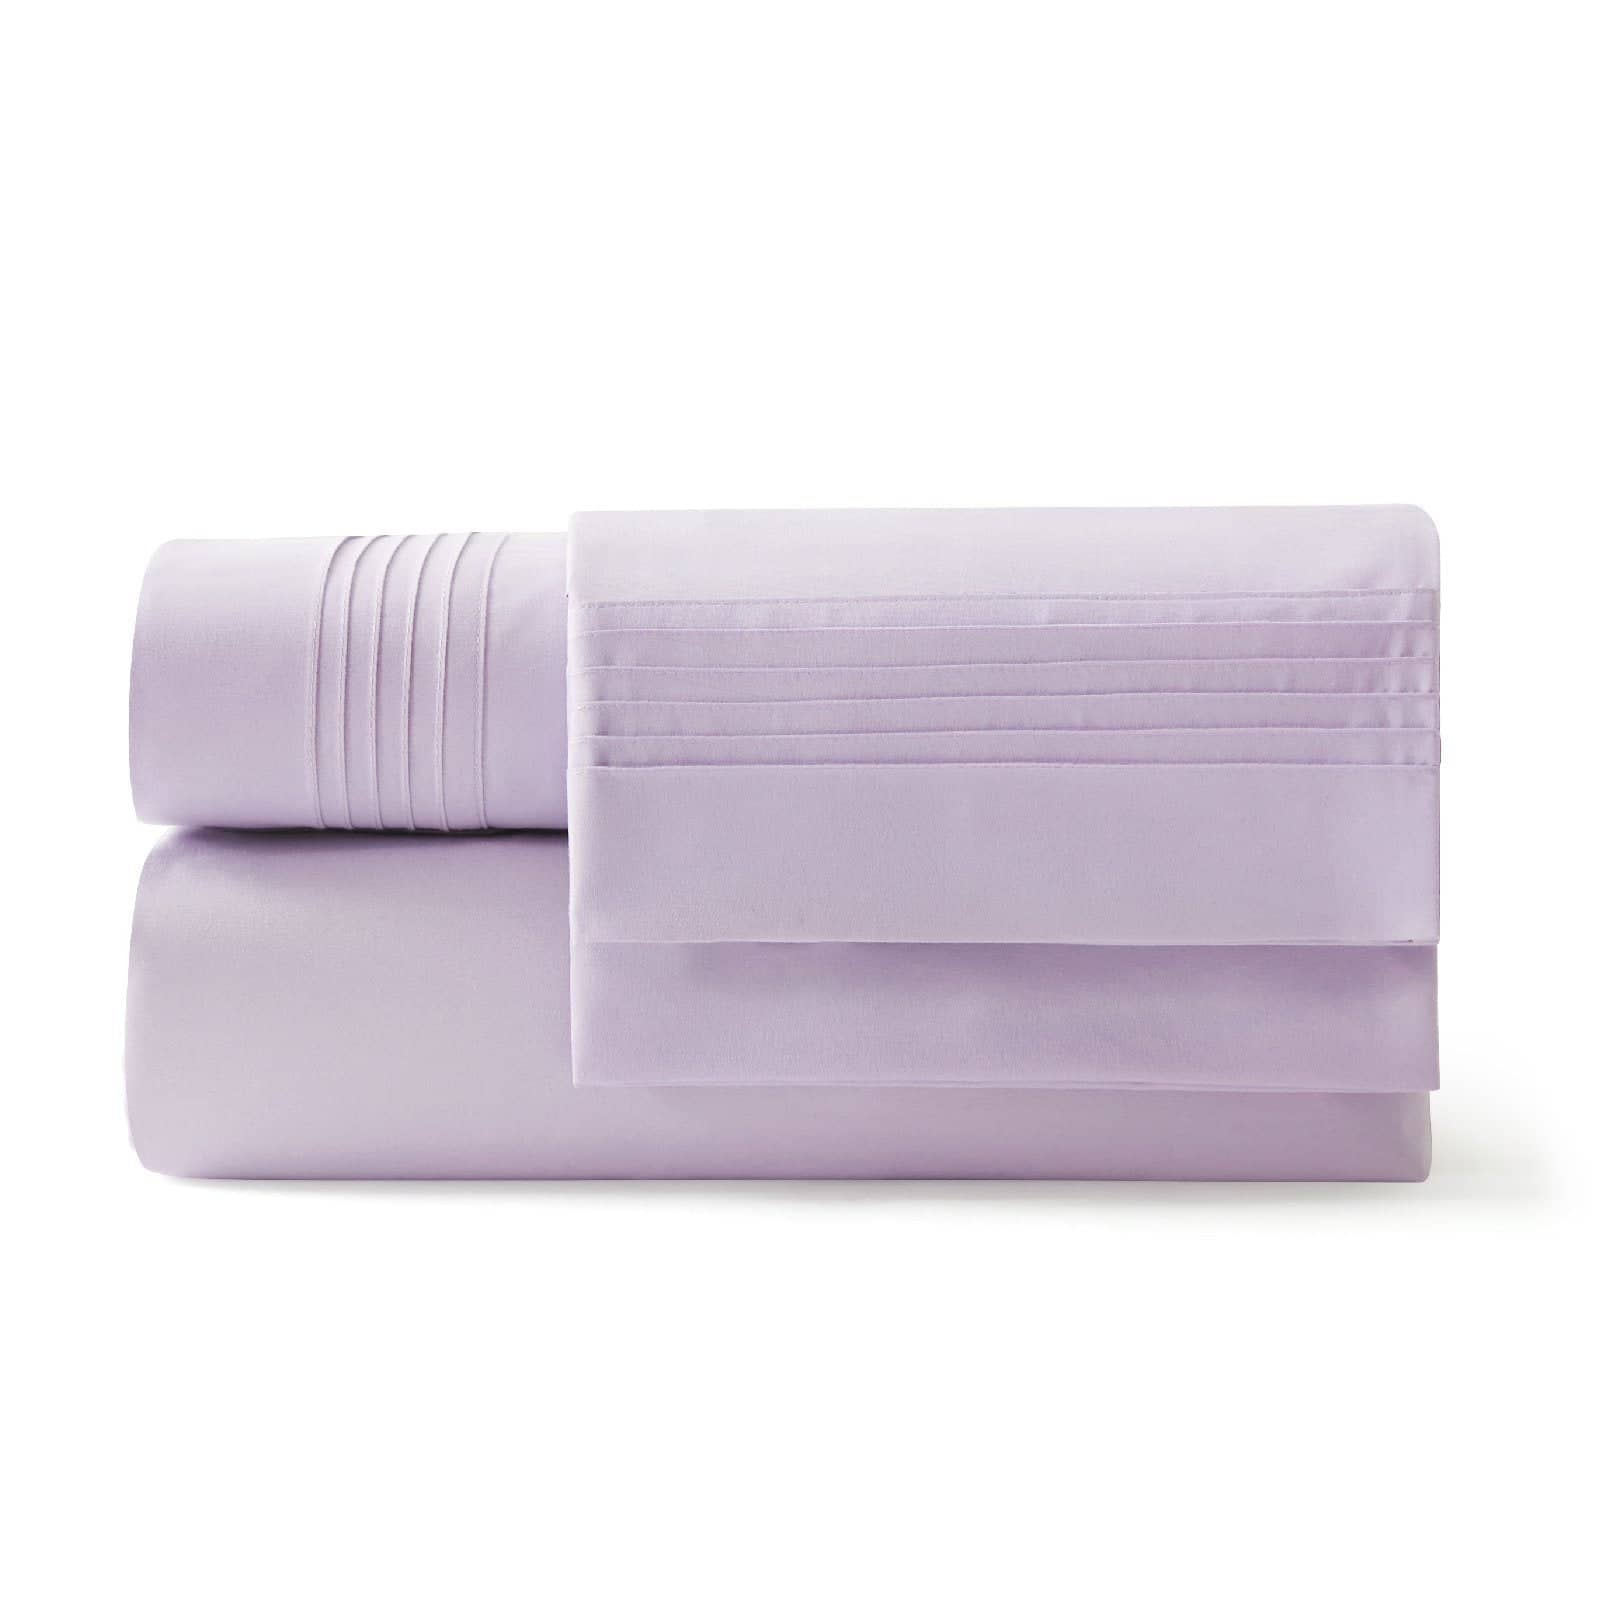 Bedsure | Moisture-Wicking Sheet Set lightg purple superior quality